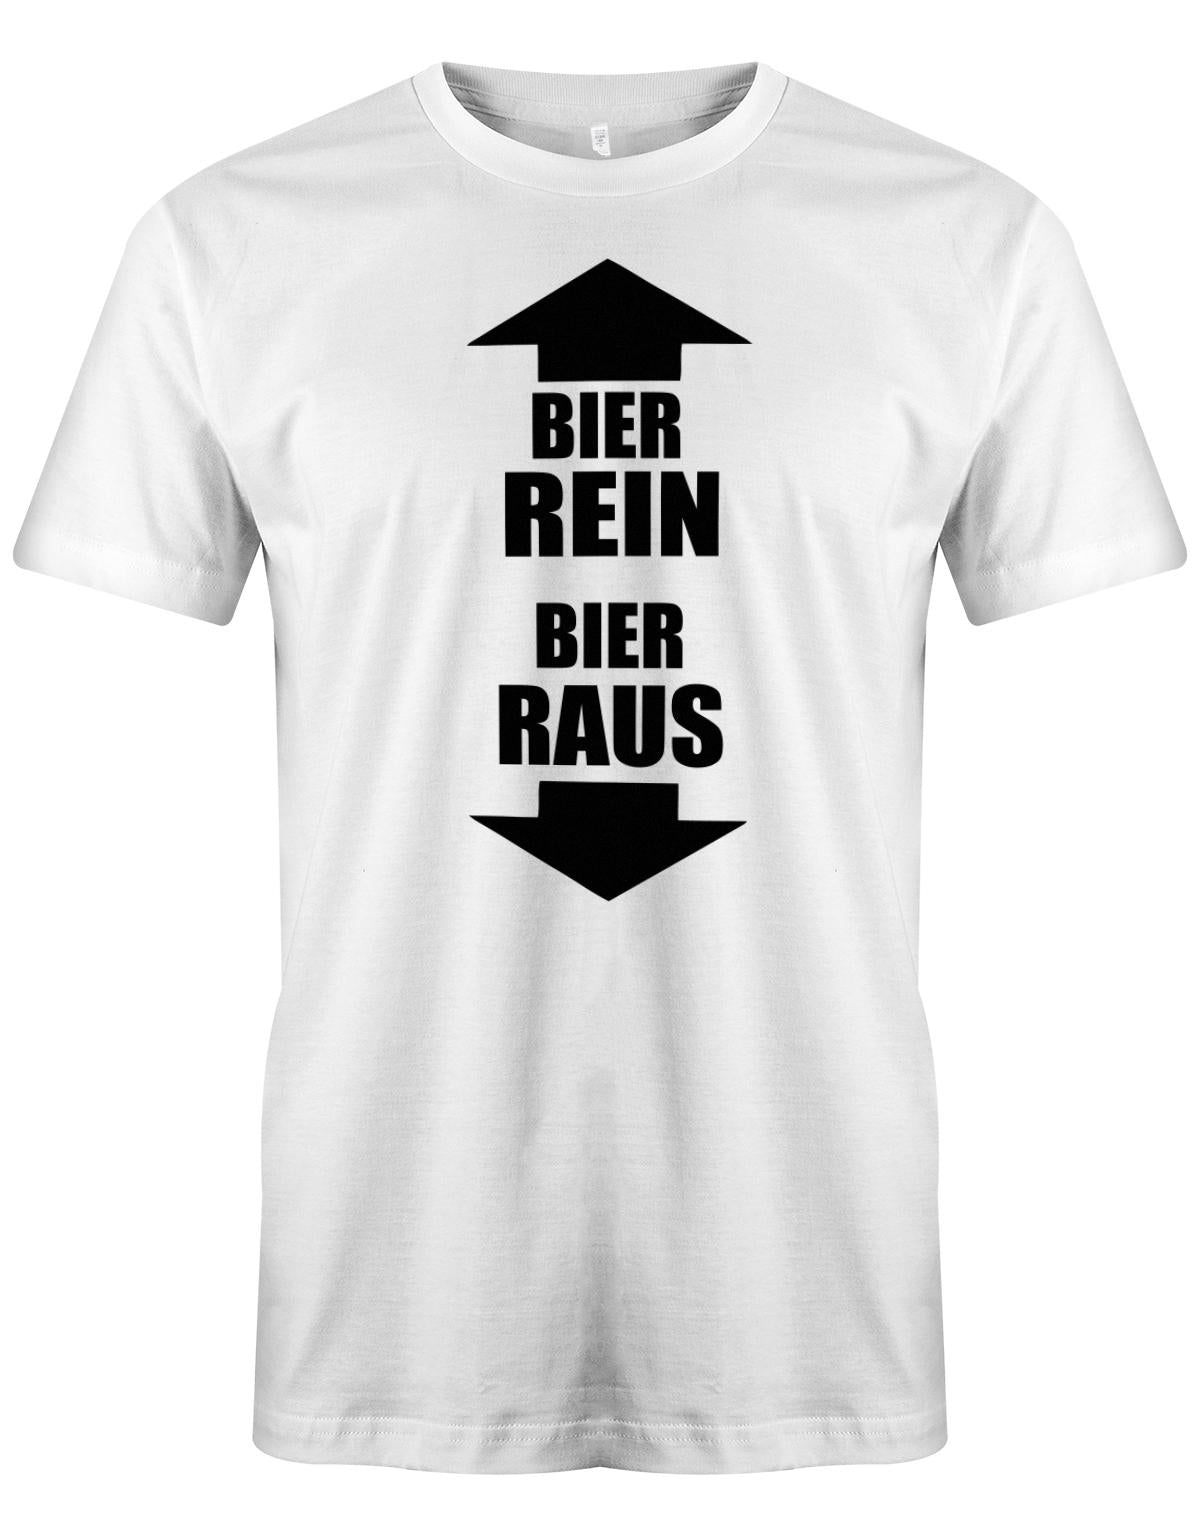 Bier-rein-Bier-raus-Bier-Shirt-Herren-Weiss